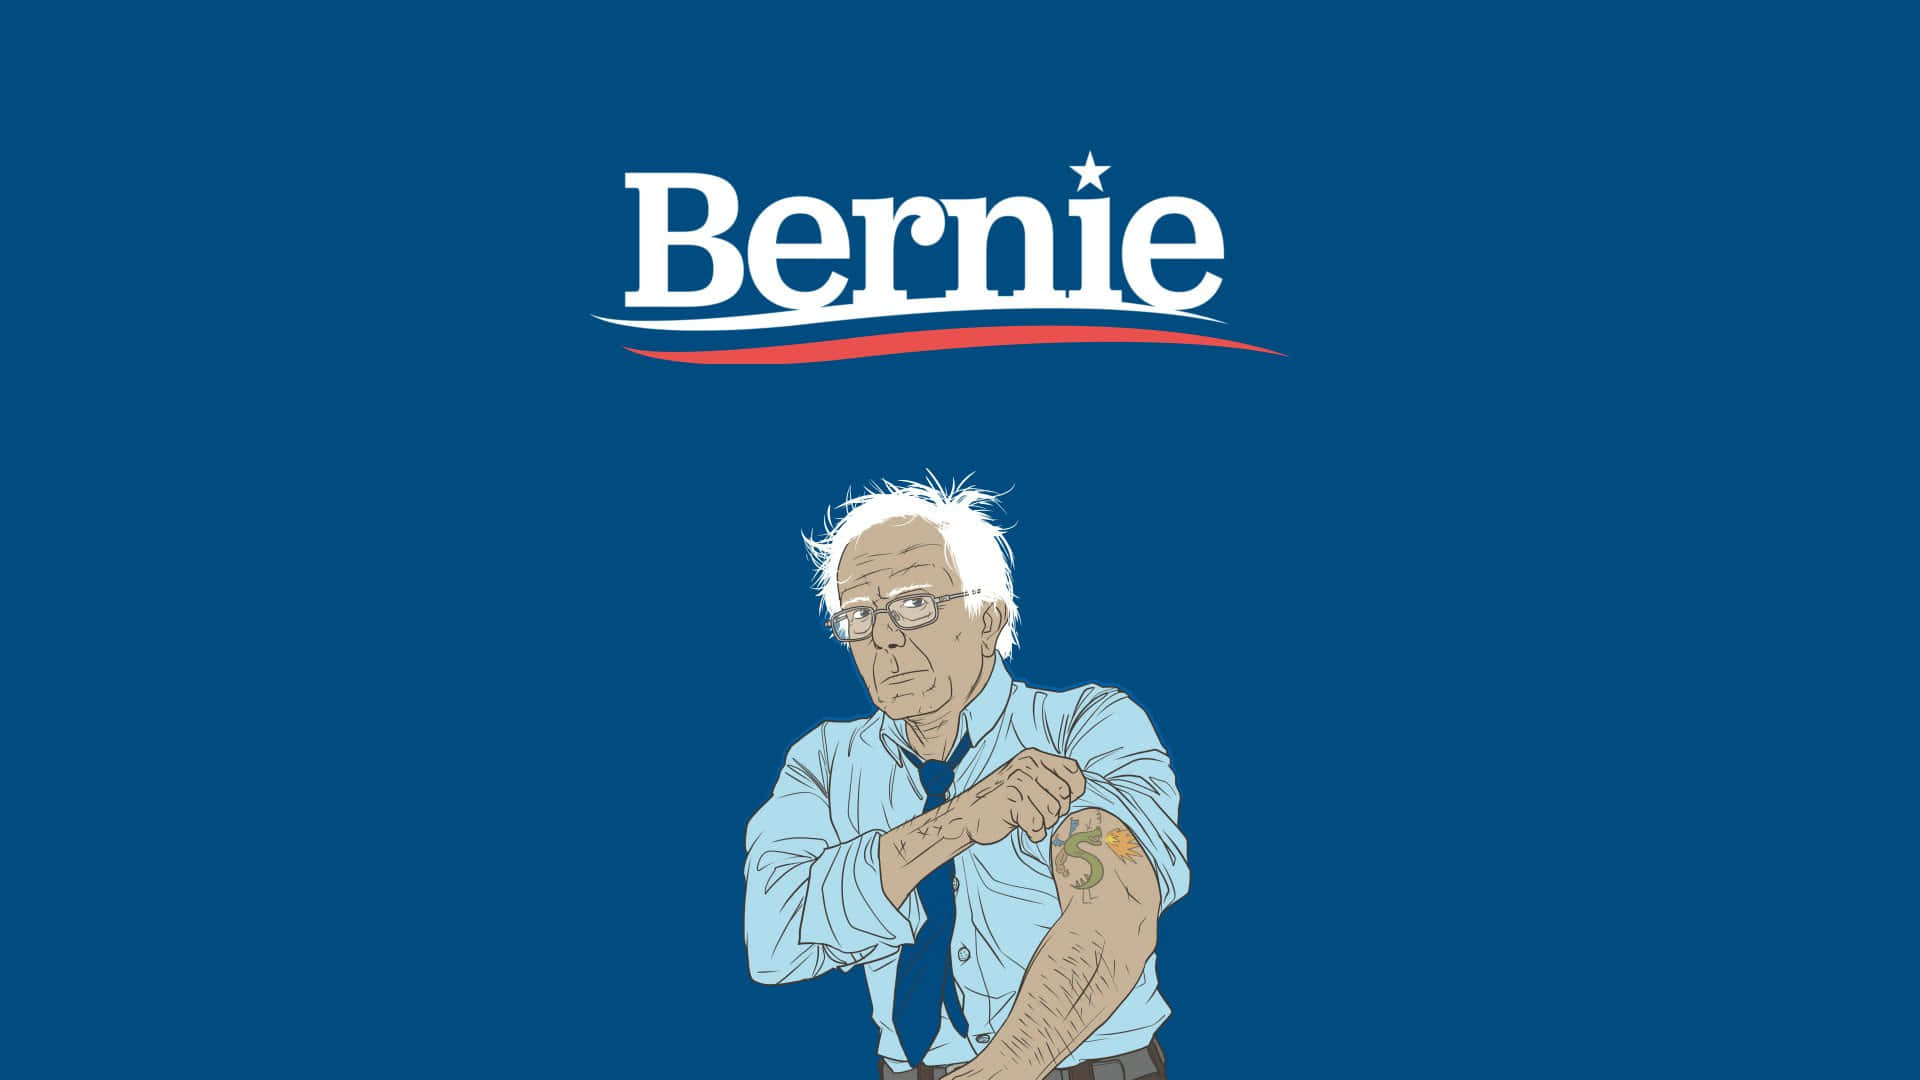 Bernie Sanders Cartoon Illustration Wallpaper